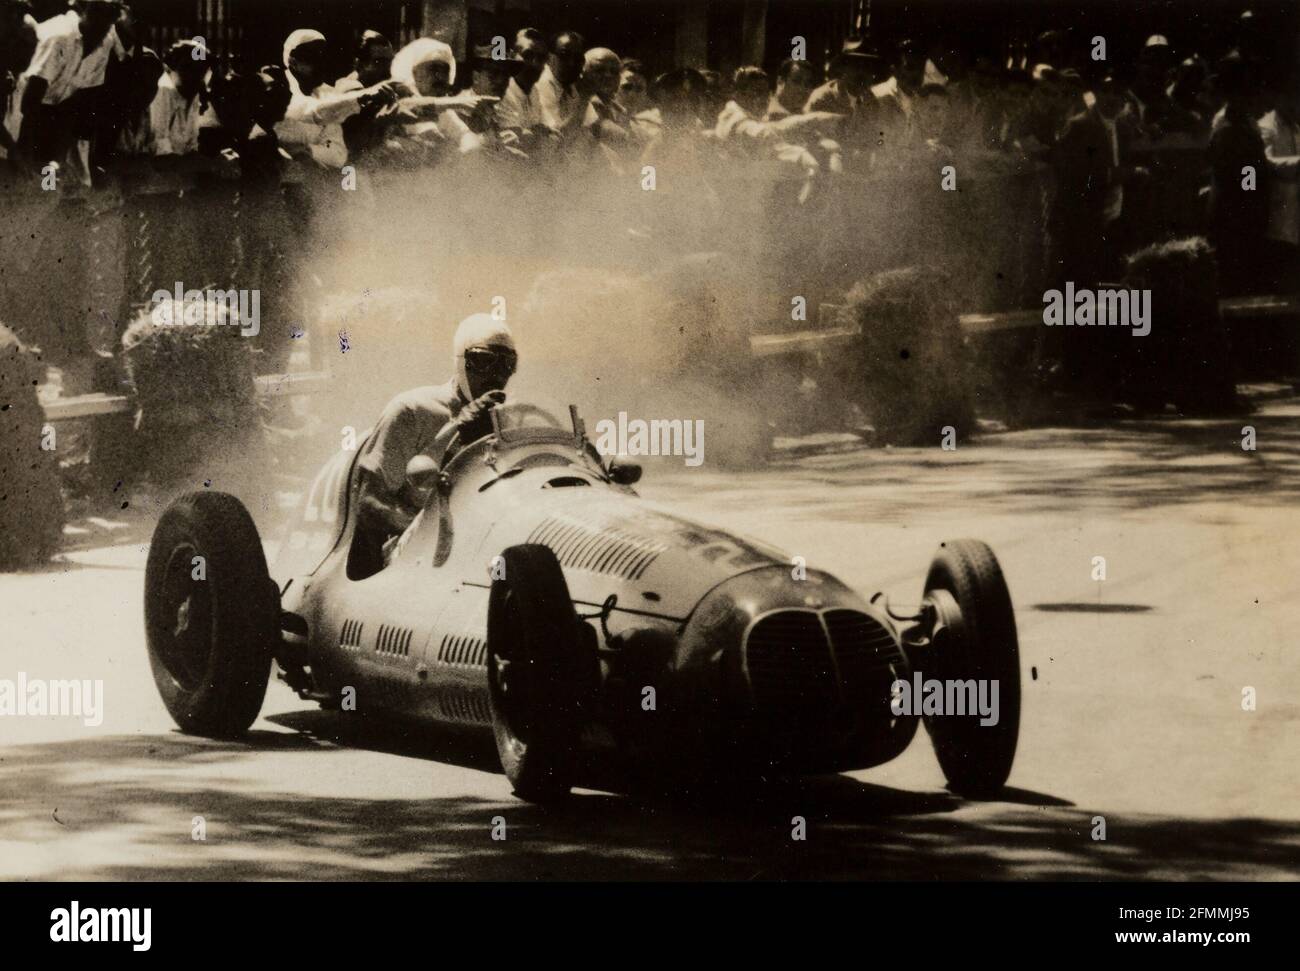 Vintage race car photo, action Stock Photo